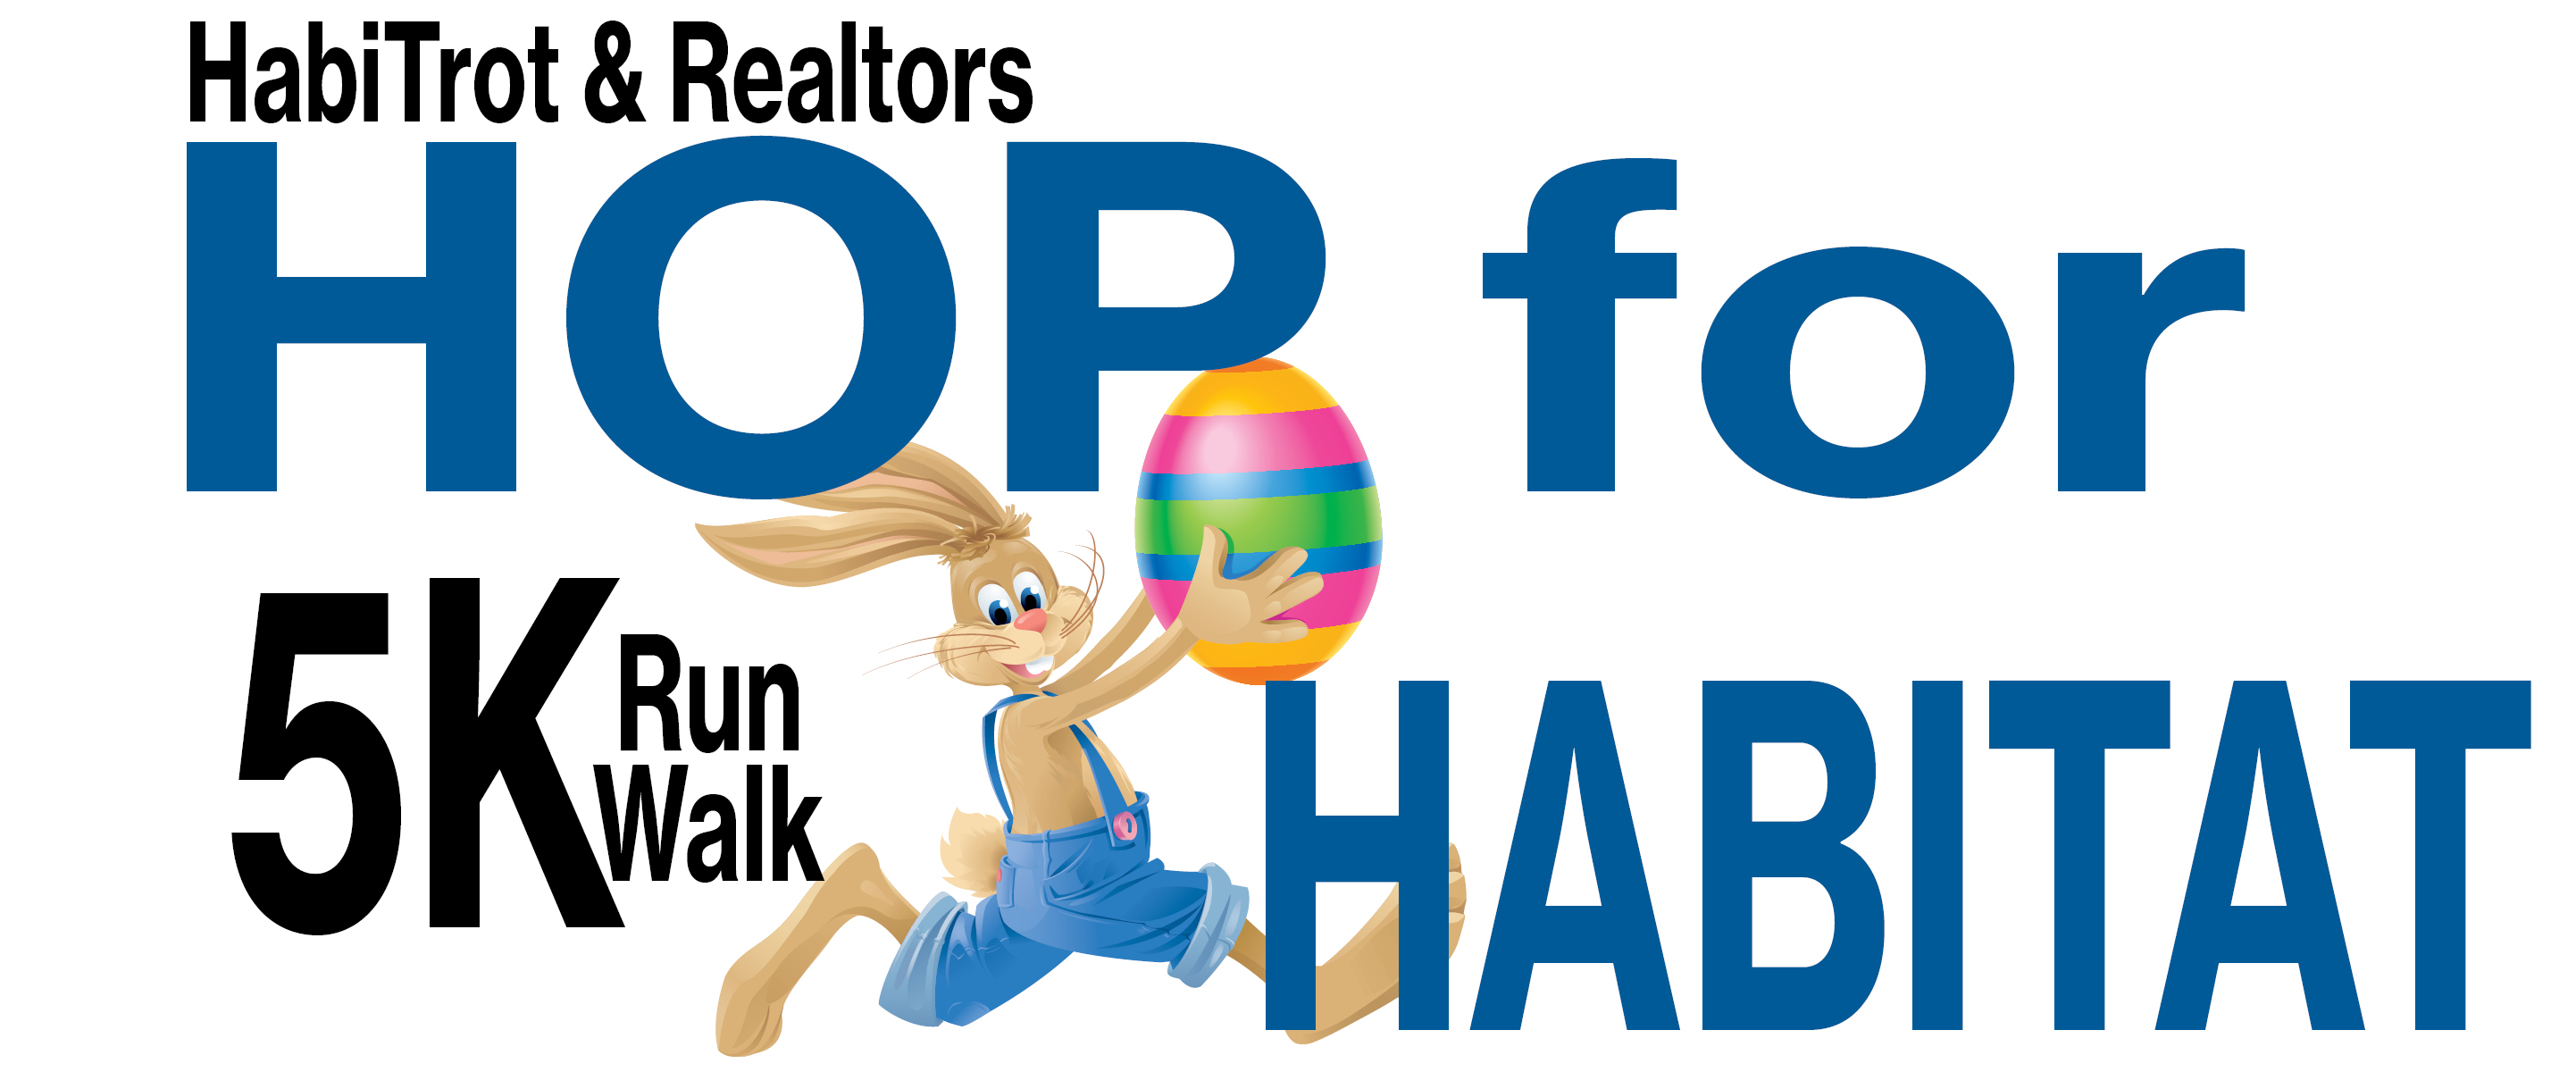 Realtors & HabiTrot 'Hop for Habitat' 5K Run/Walk